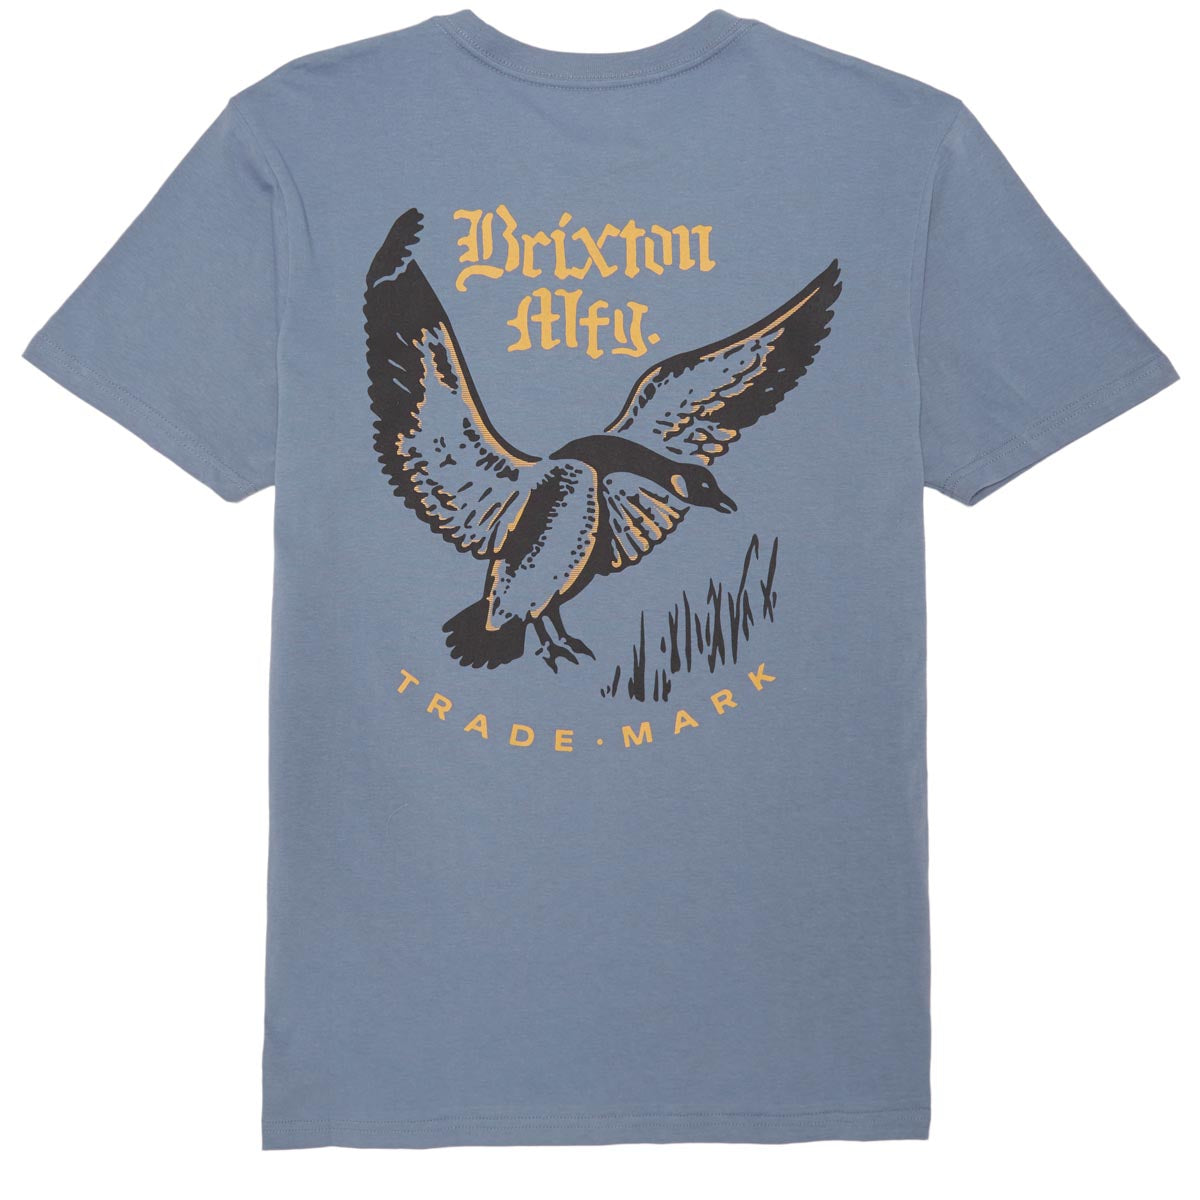 Brixton Portside T-Shirt - Flint Blue image 1